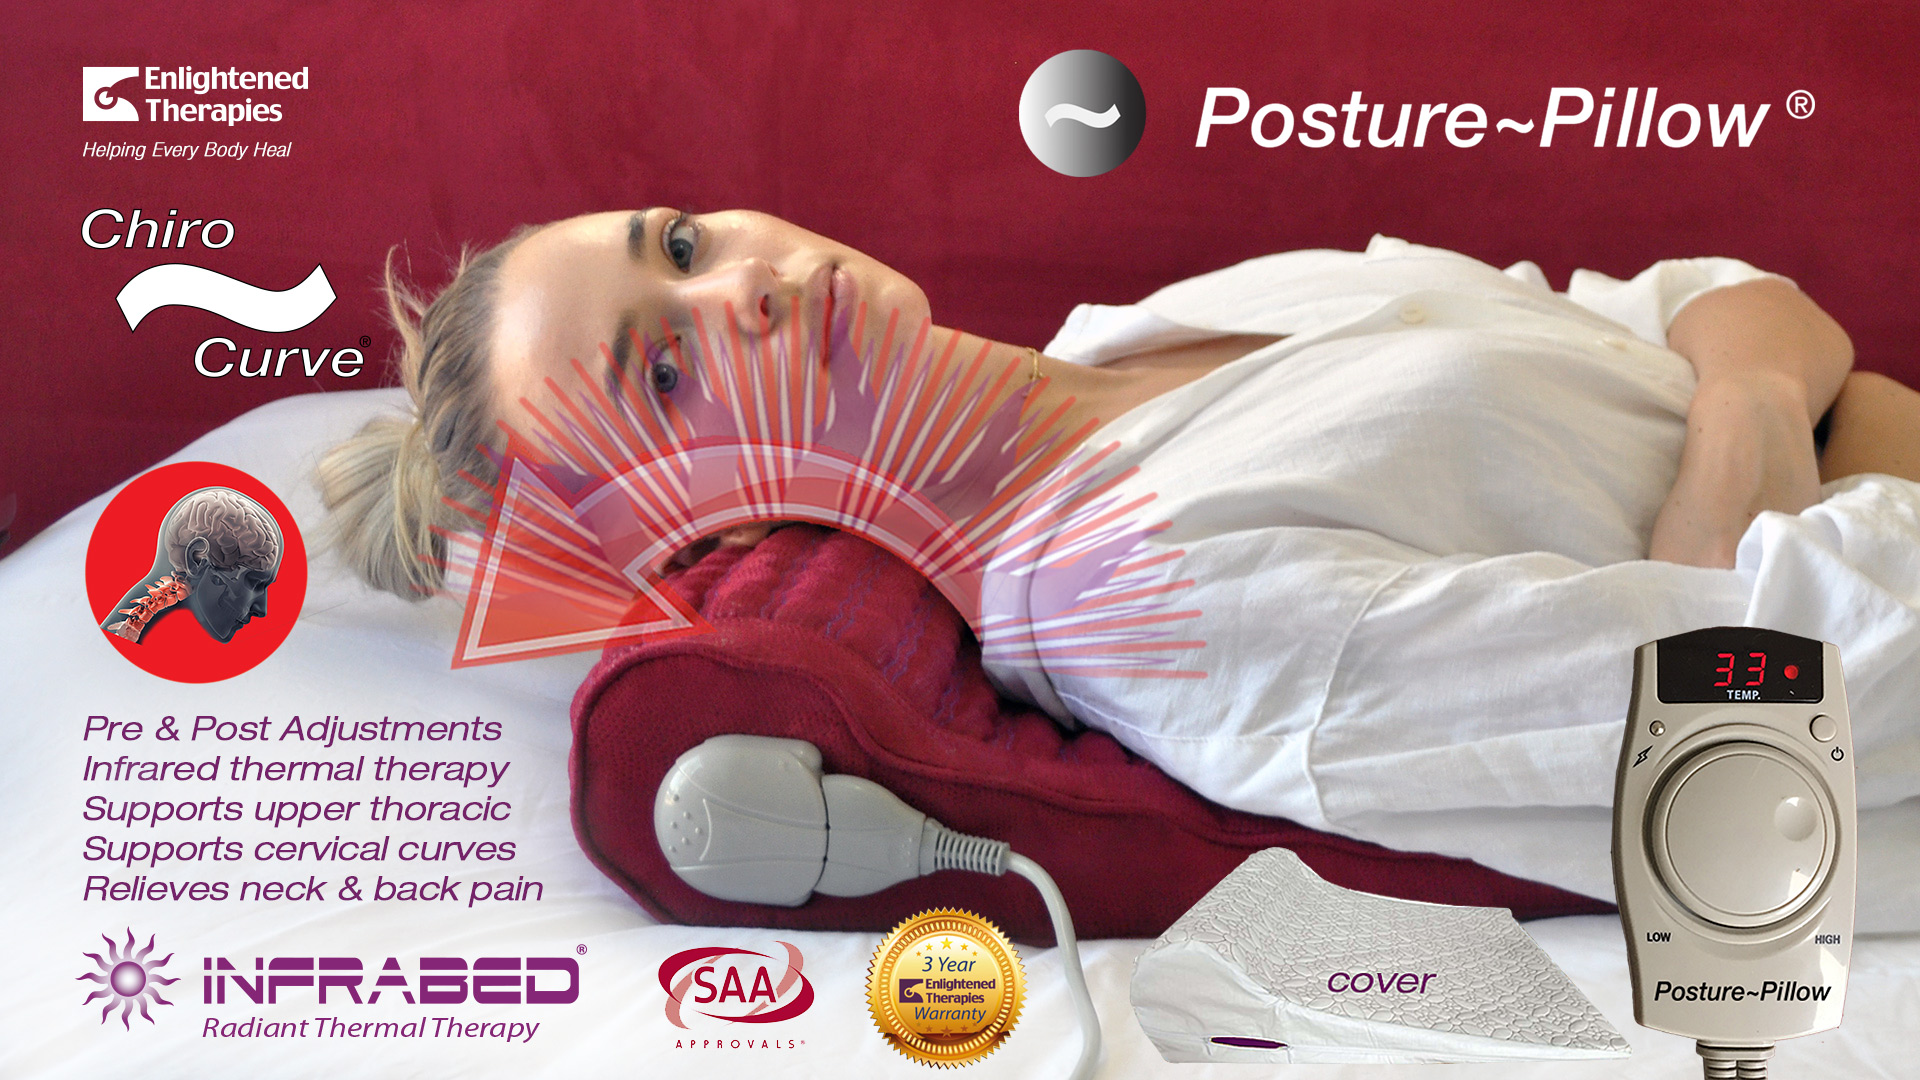 Posture~Pillow - Enlightened Therapies